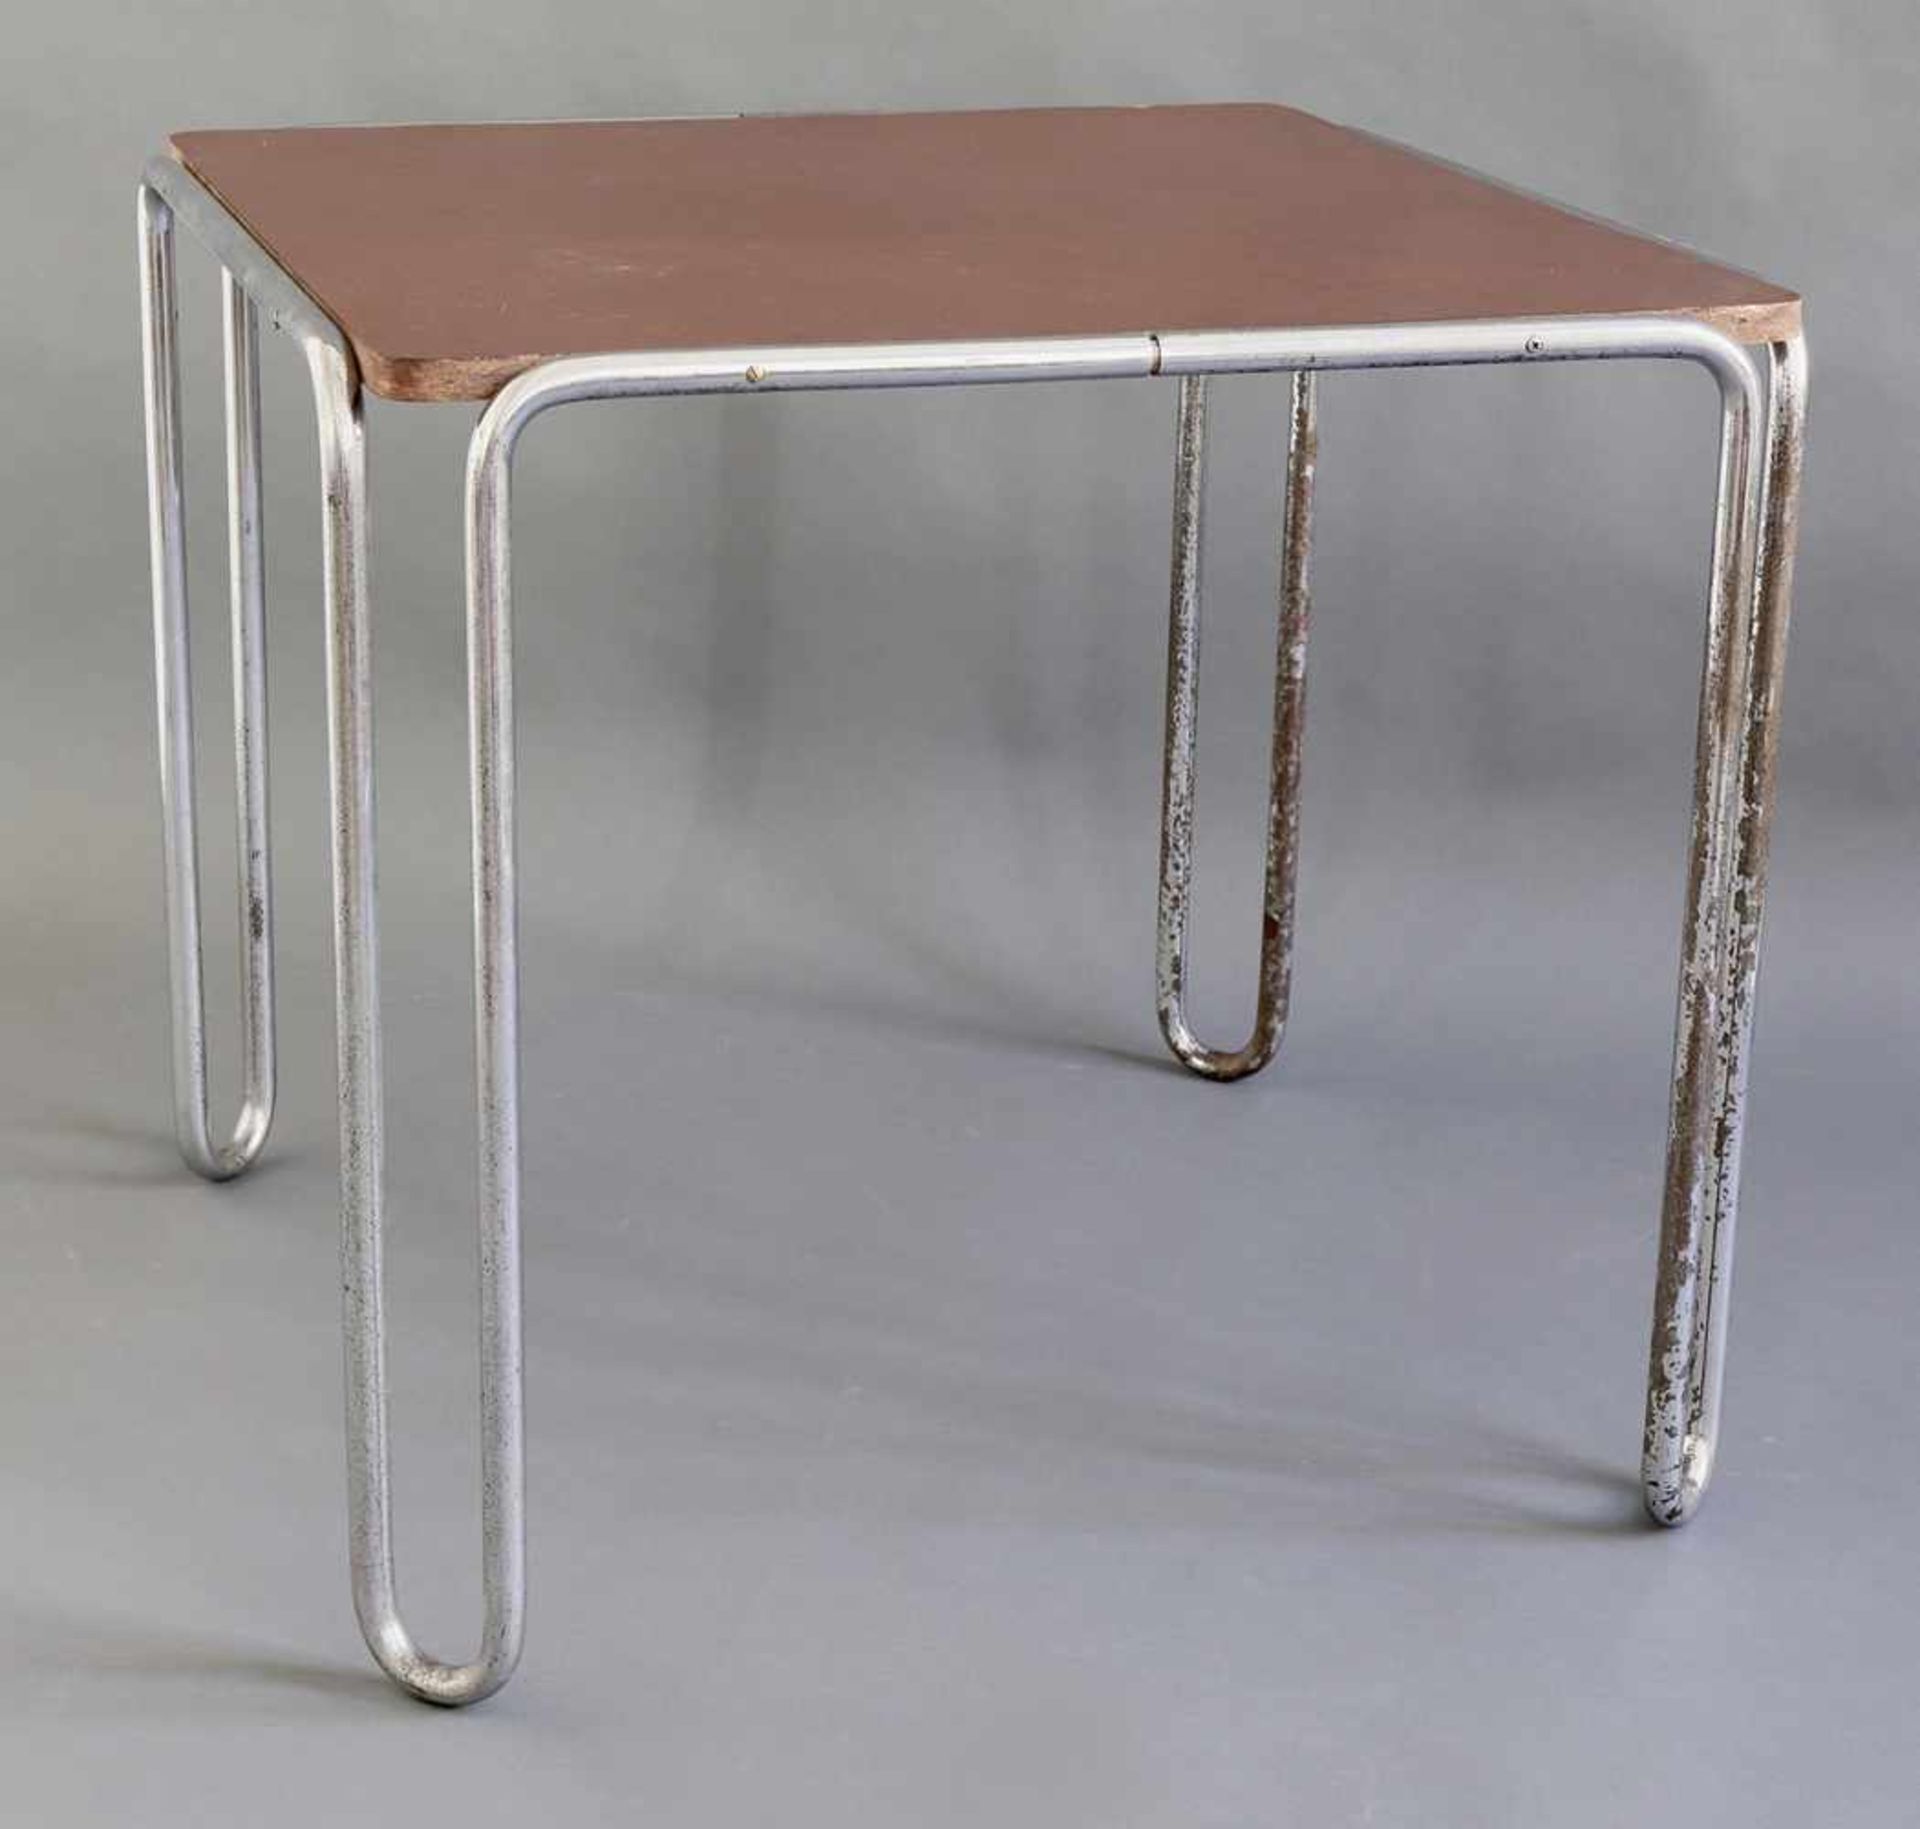 Marcel BreuerMarcel Breuer Table Model B10 1930sTable model B10. Designed in 1927, manufactured in